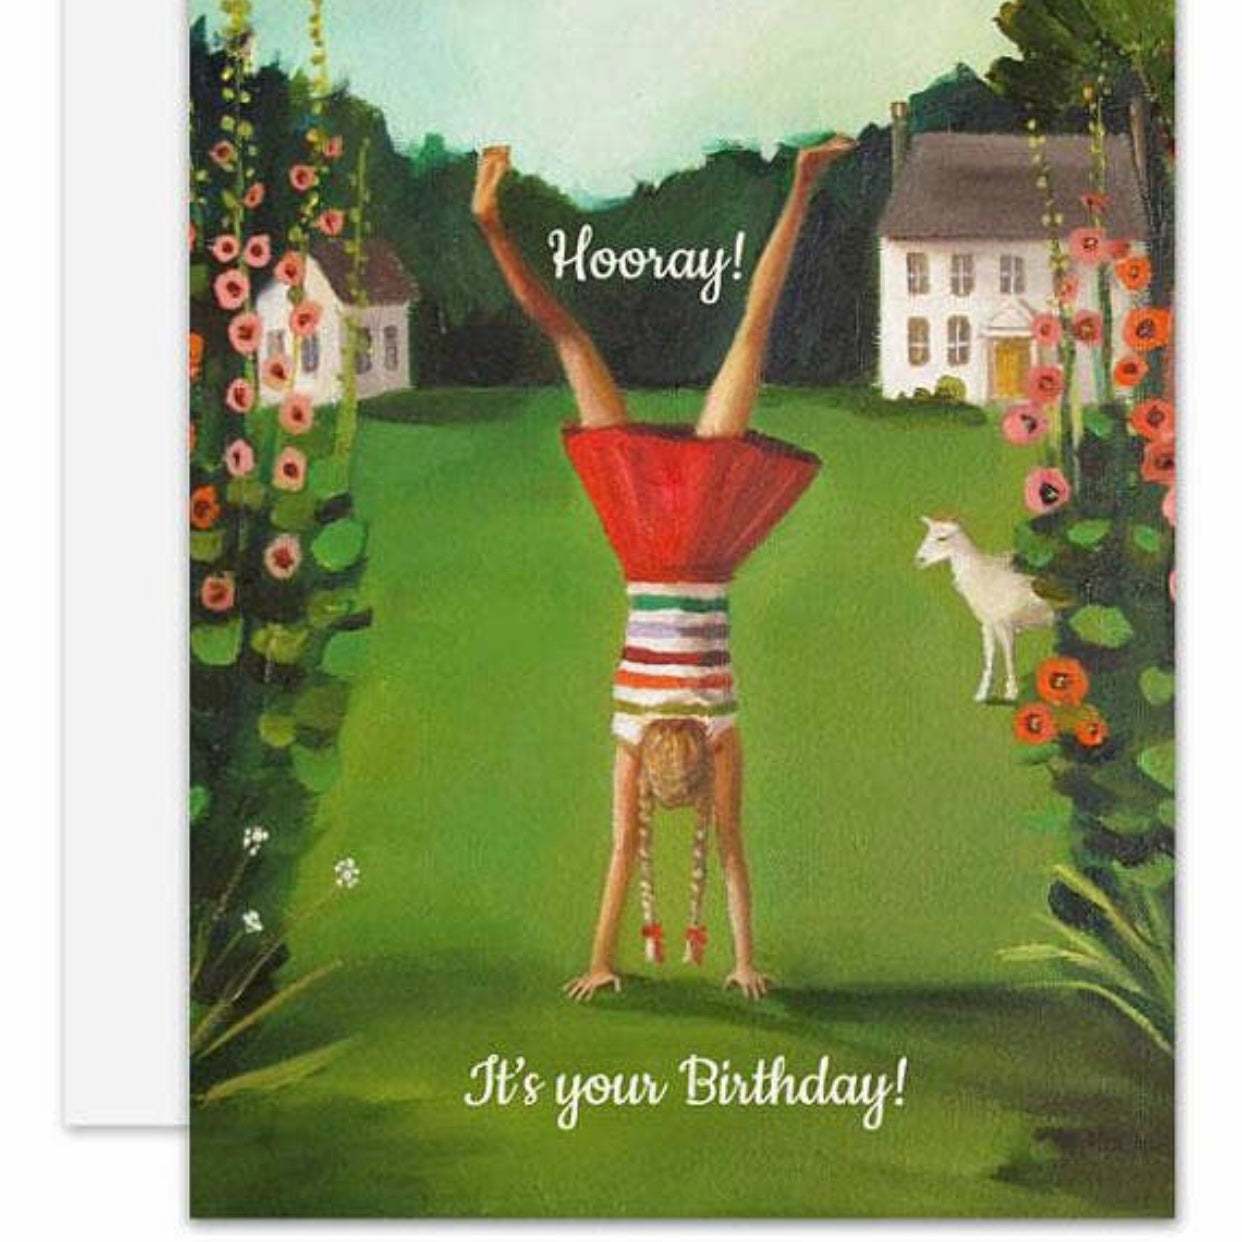 Hooray It's your birthday greeting card